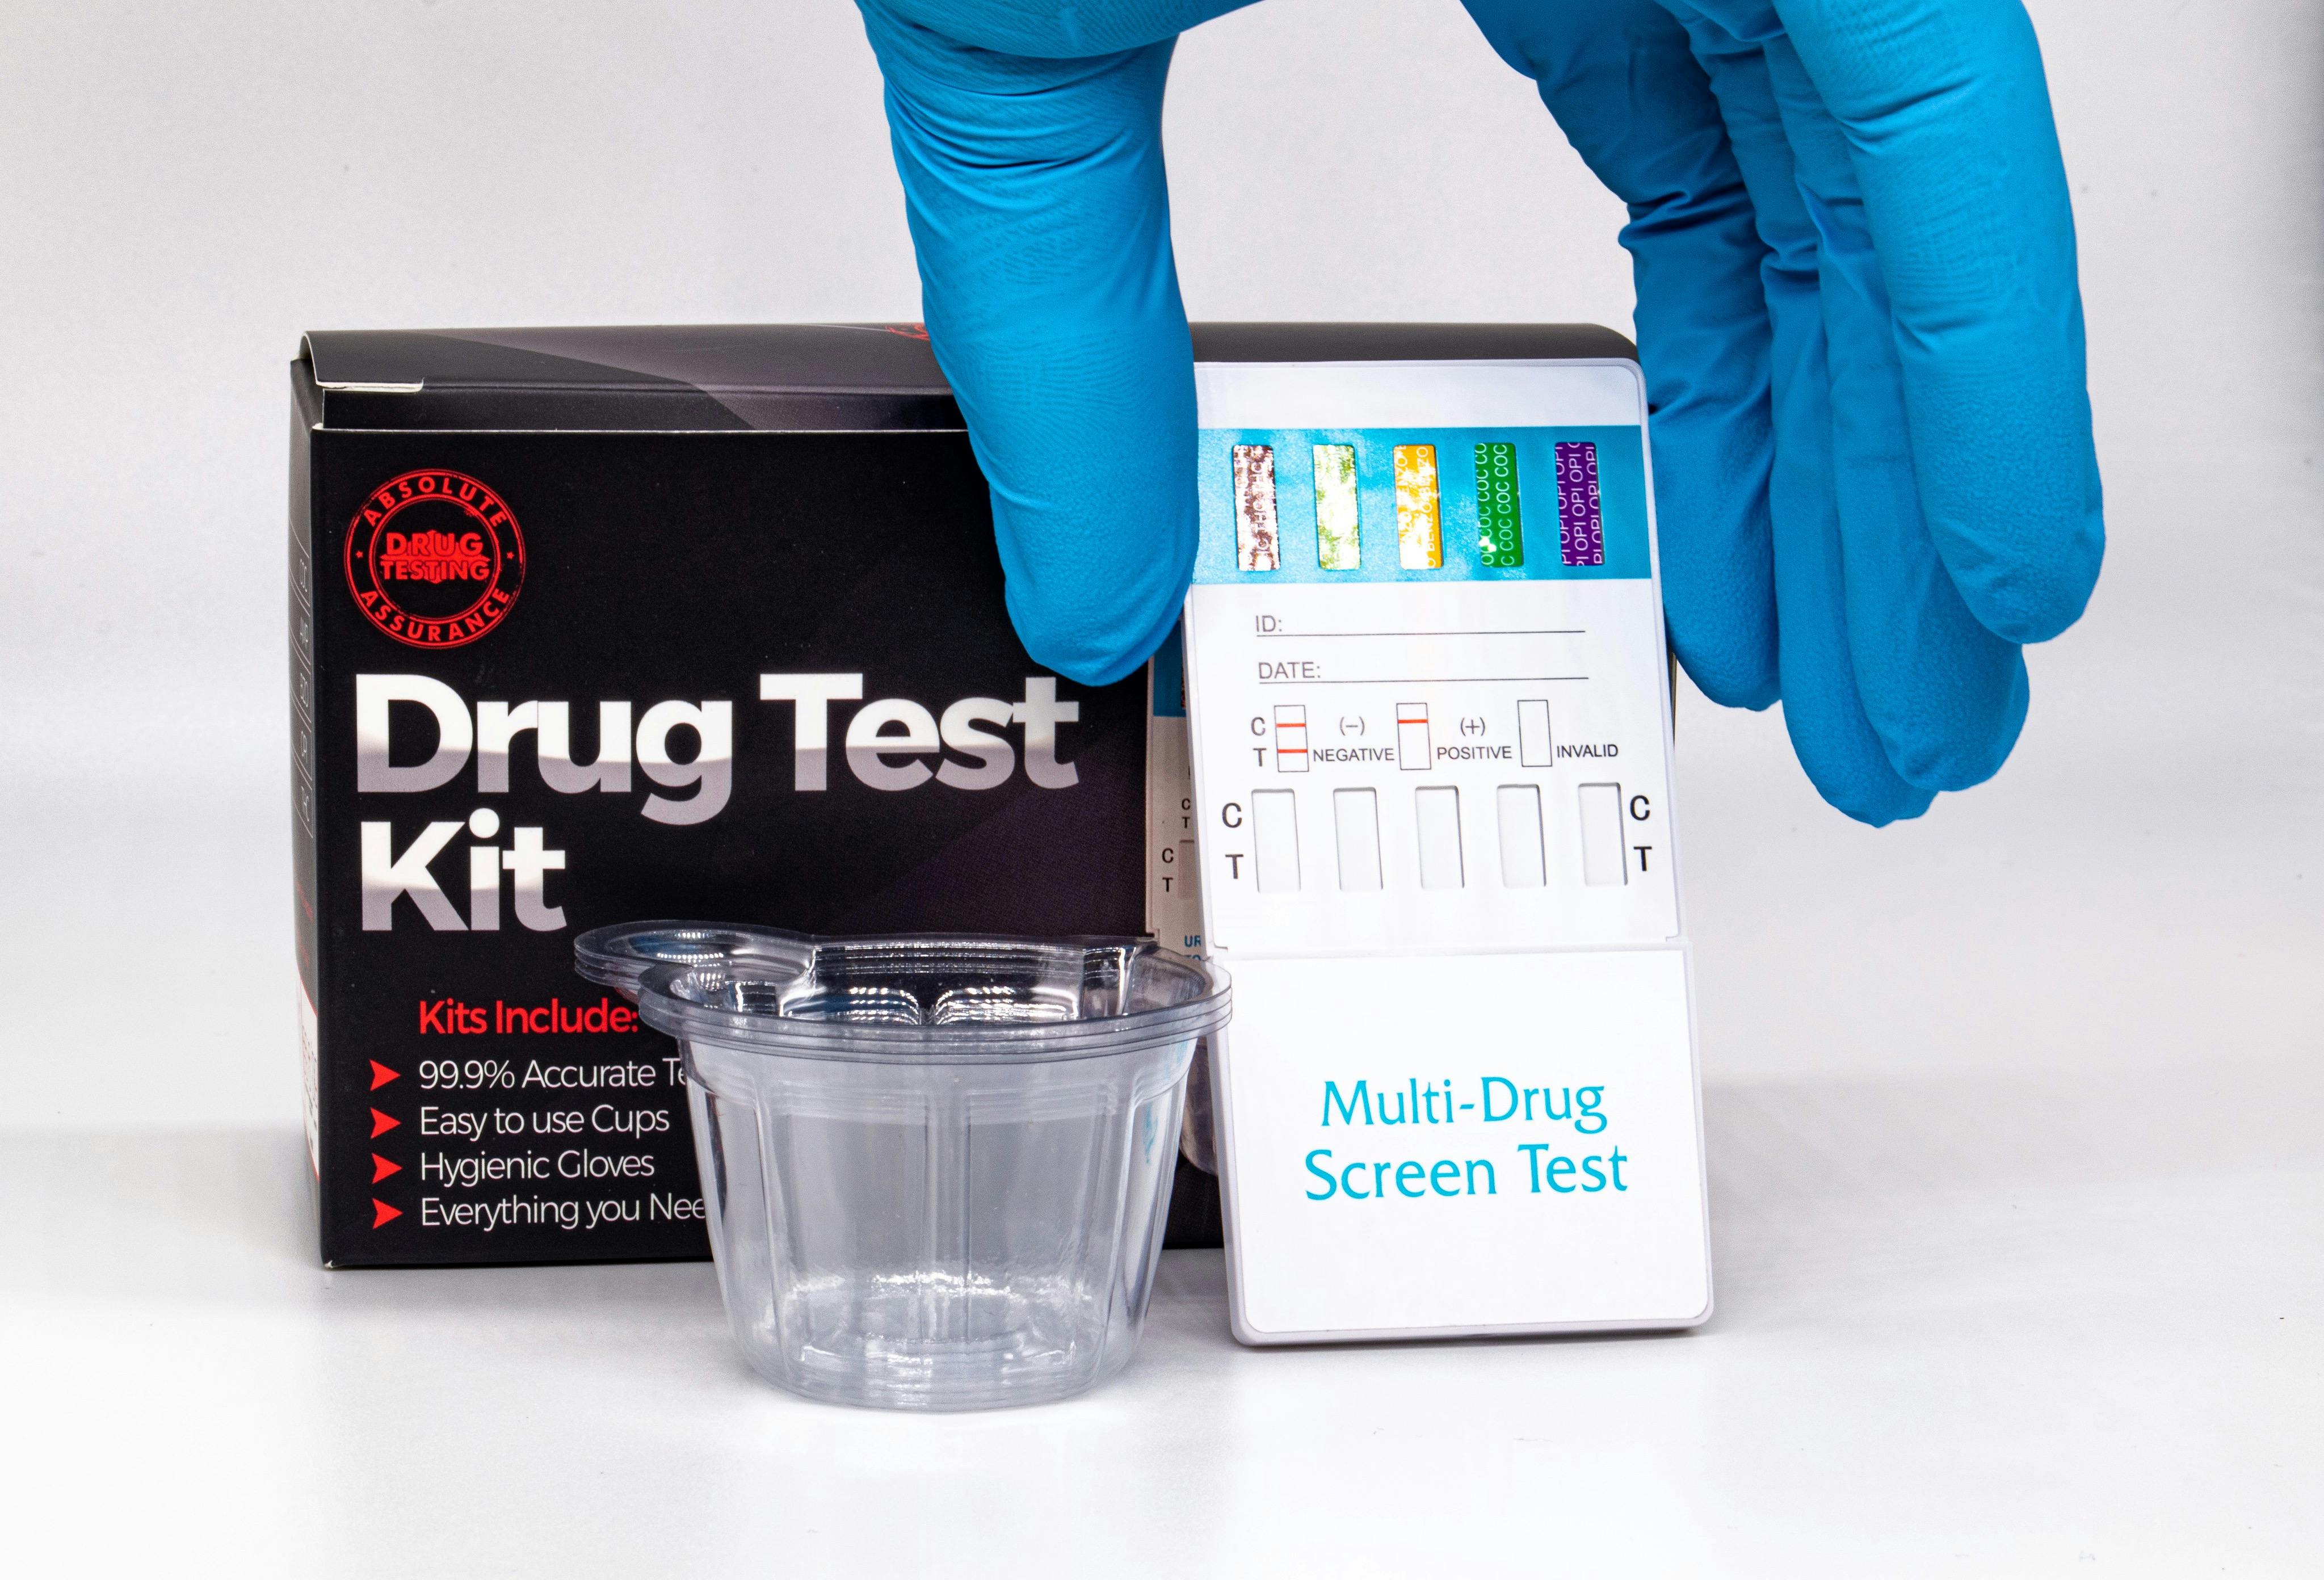 Multi-drug Screen Test and Kit Boxes u00b7 Free Stock Photo